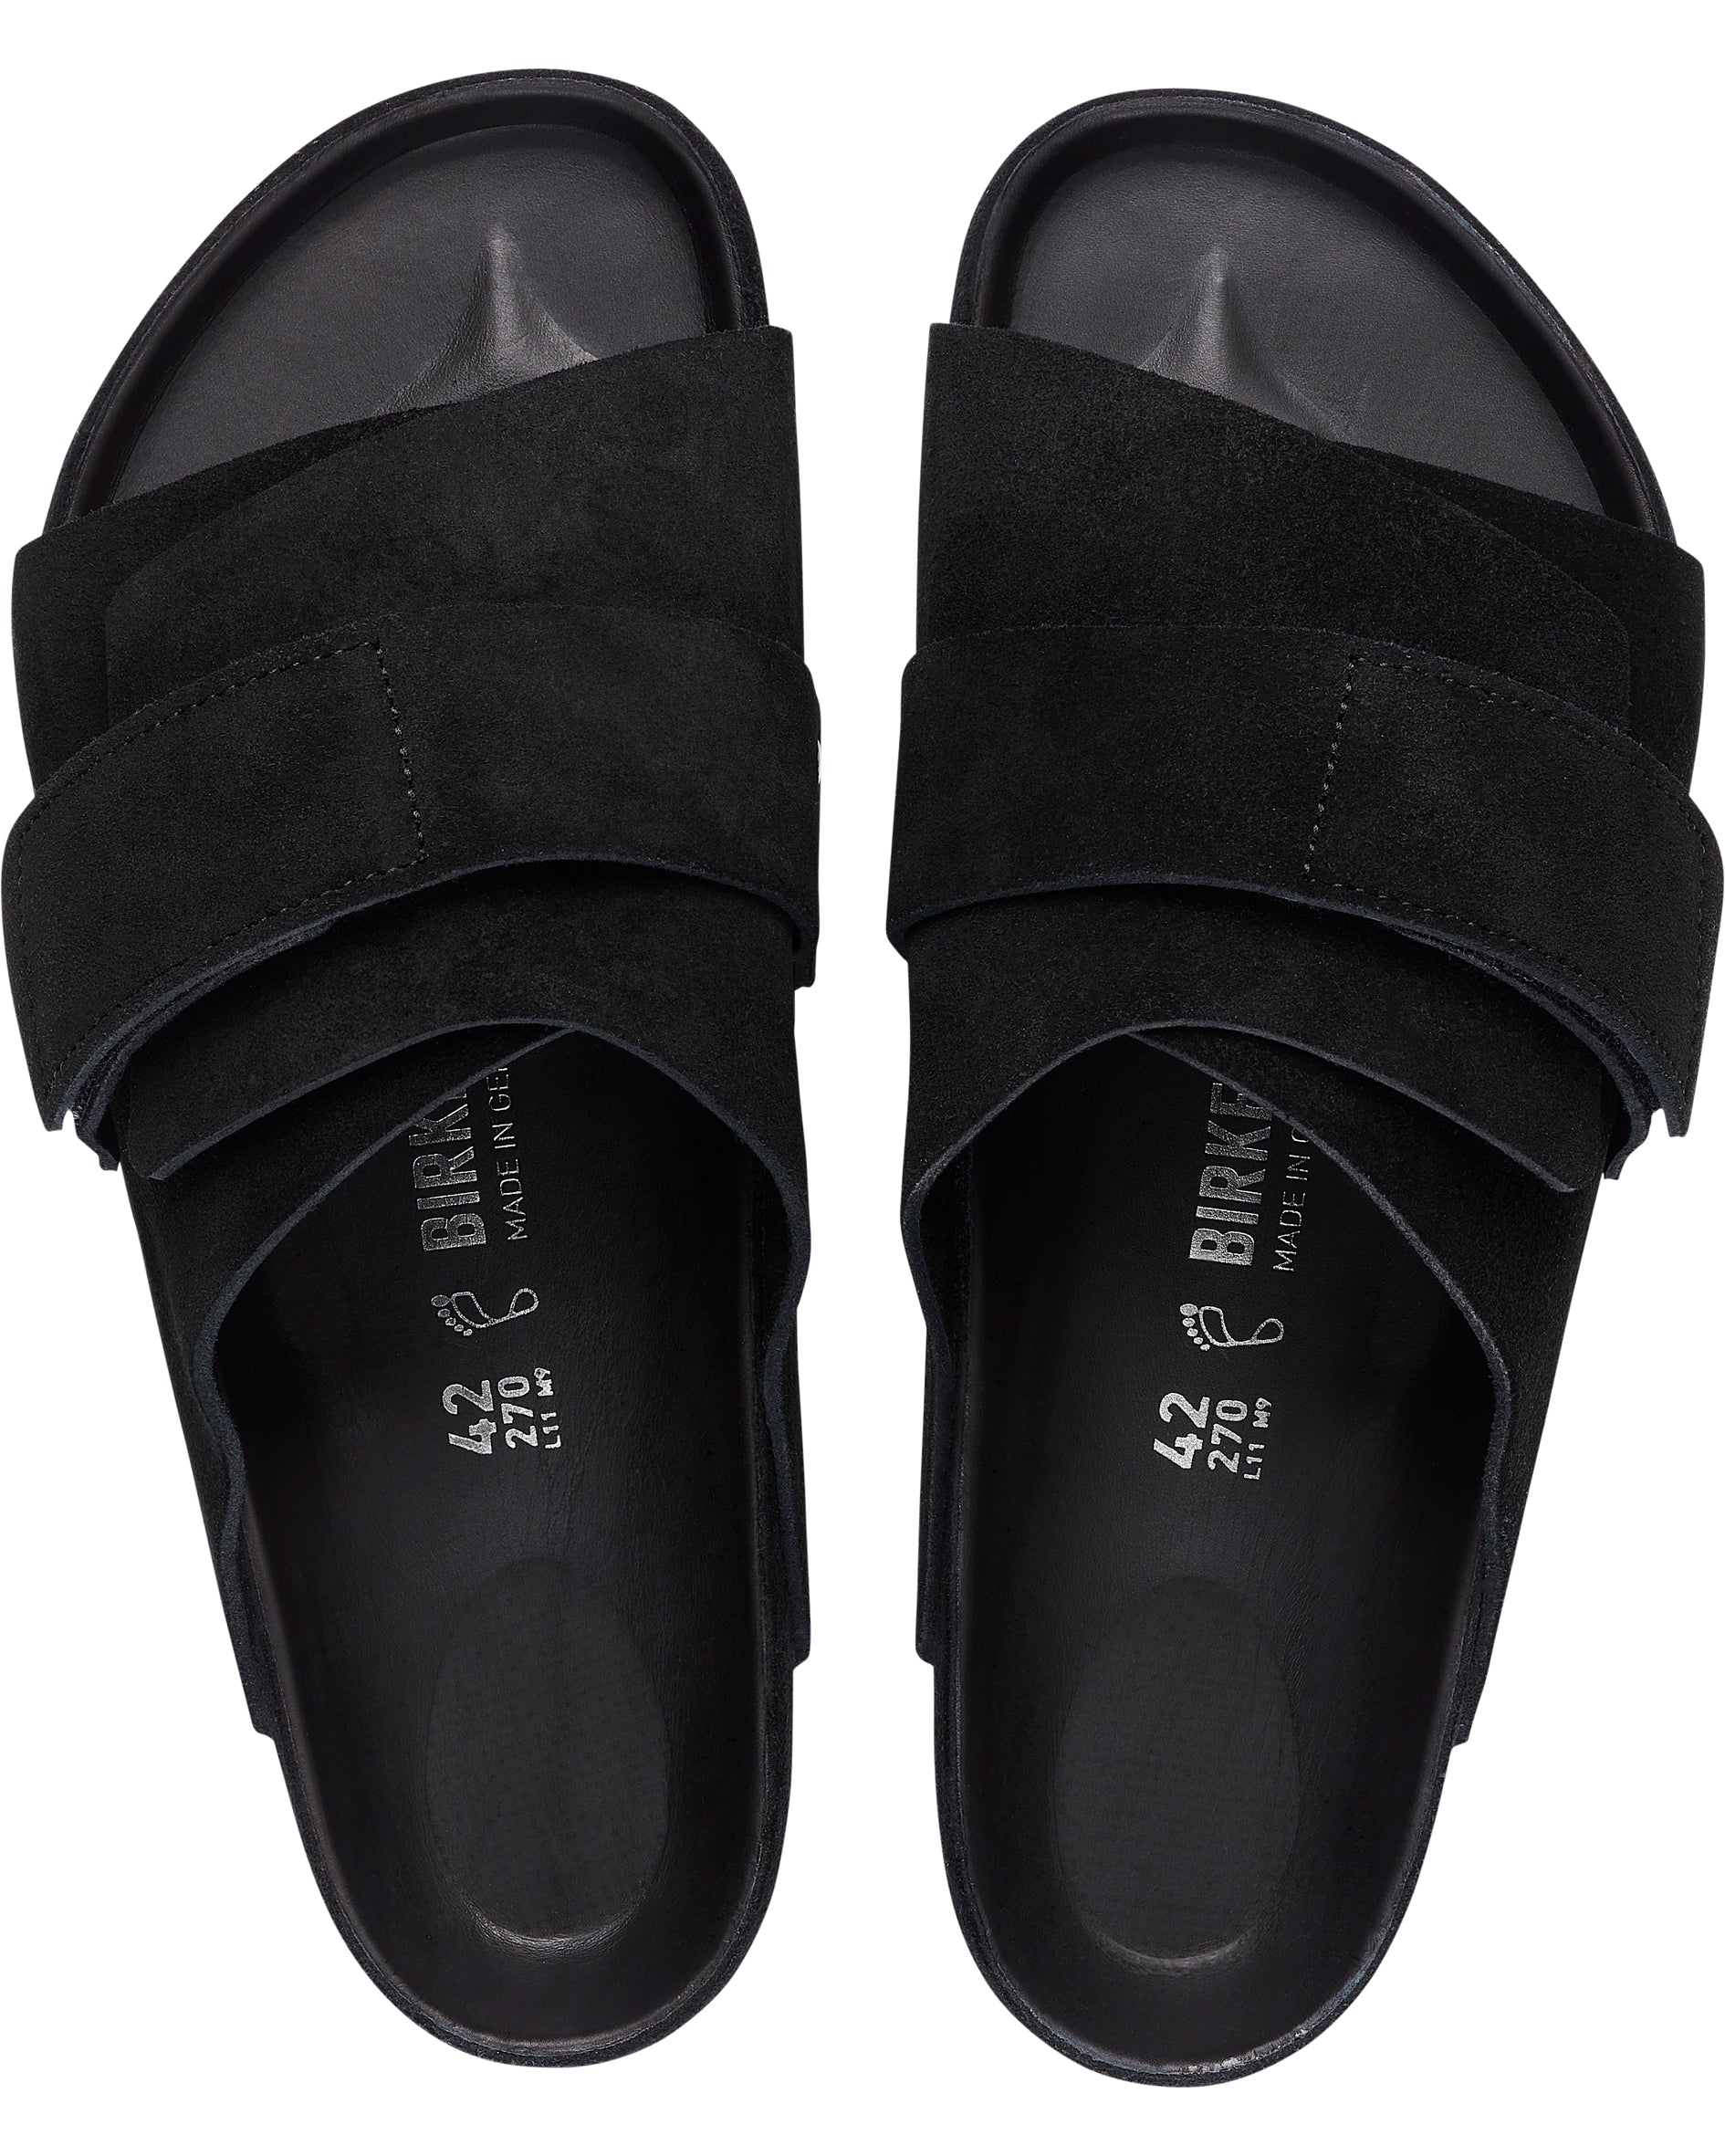 Kyoto Exquisite Black Suede Leather Sandals